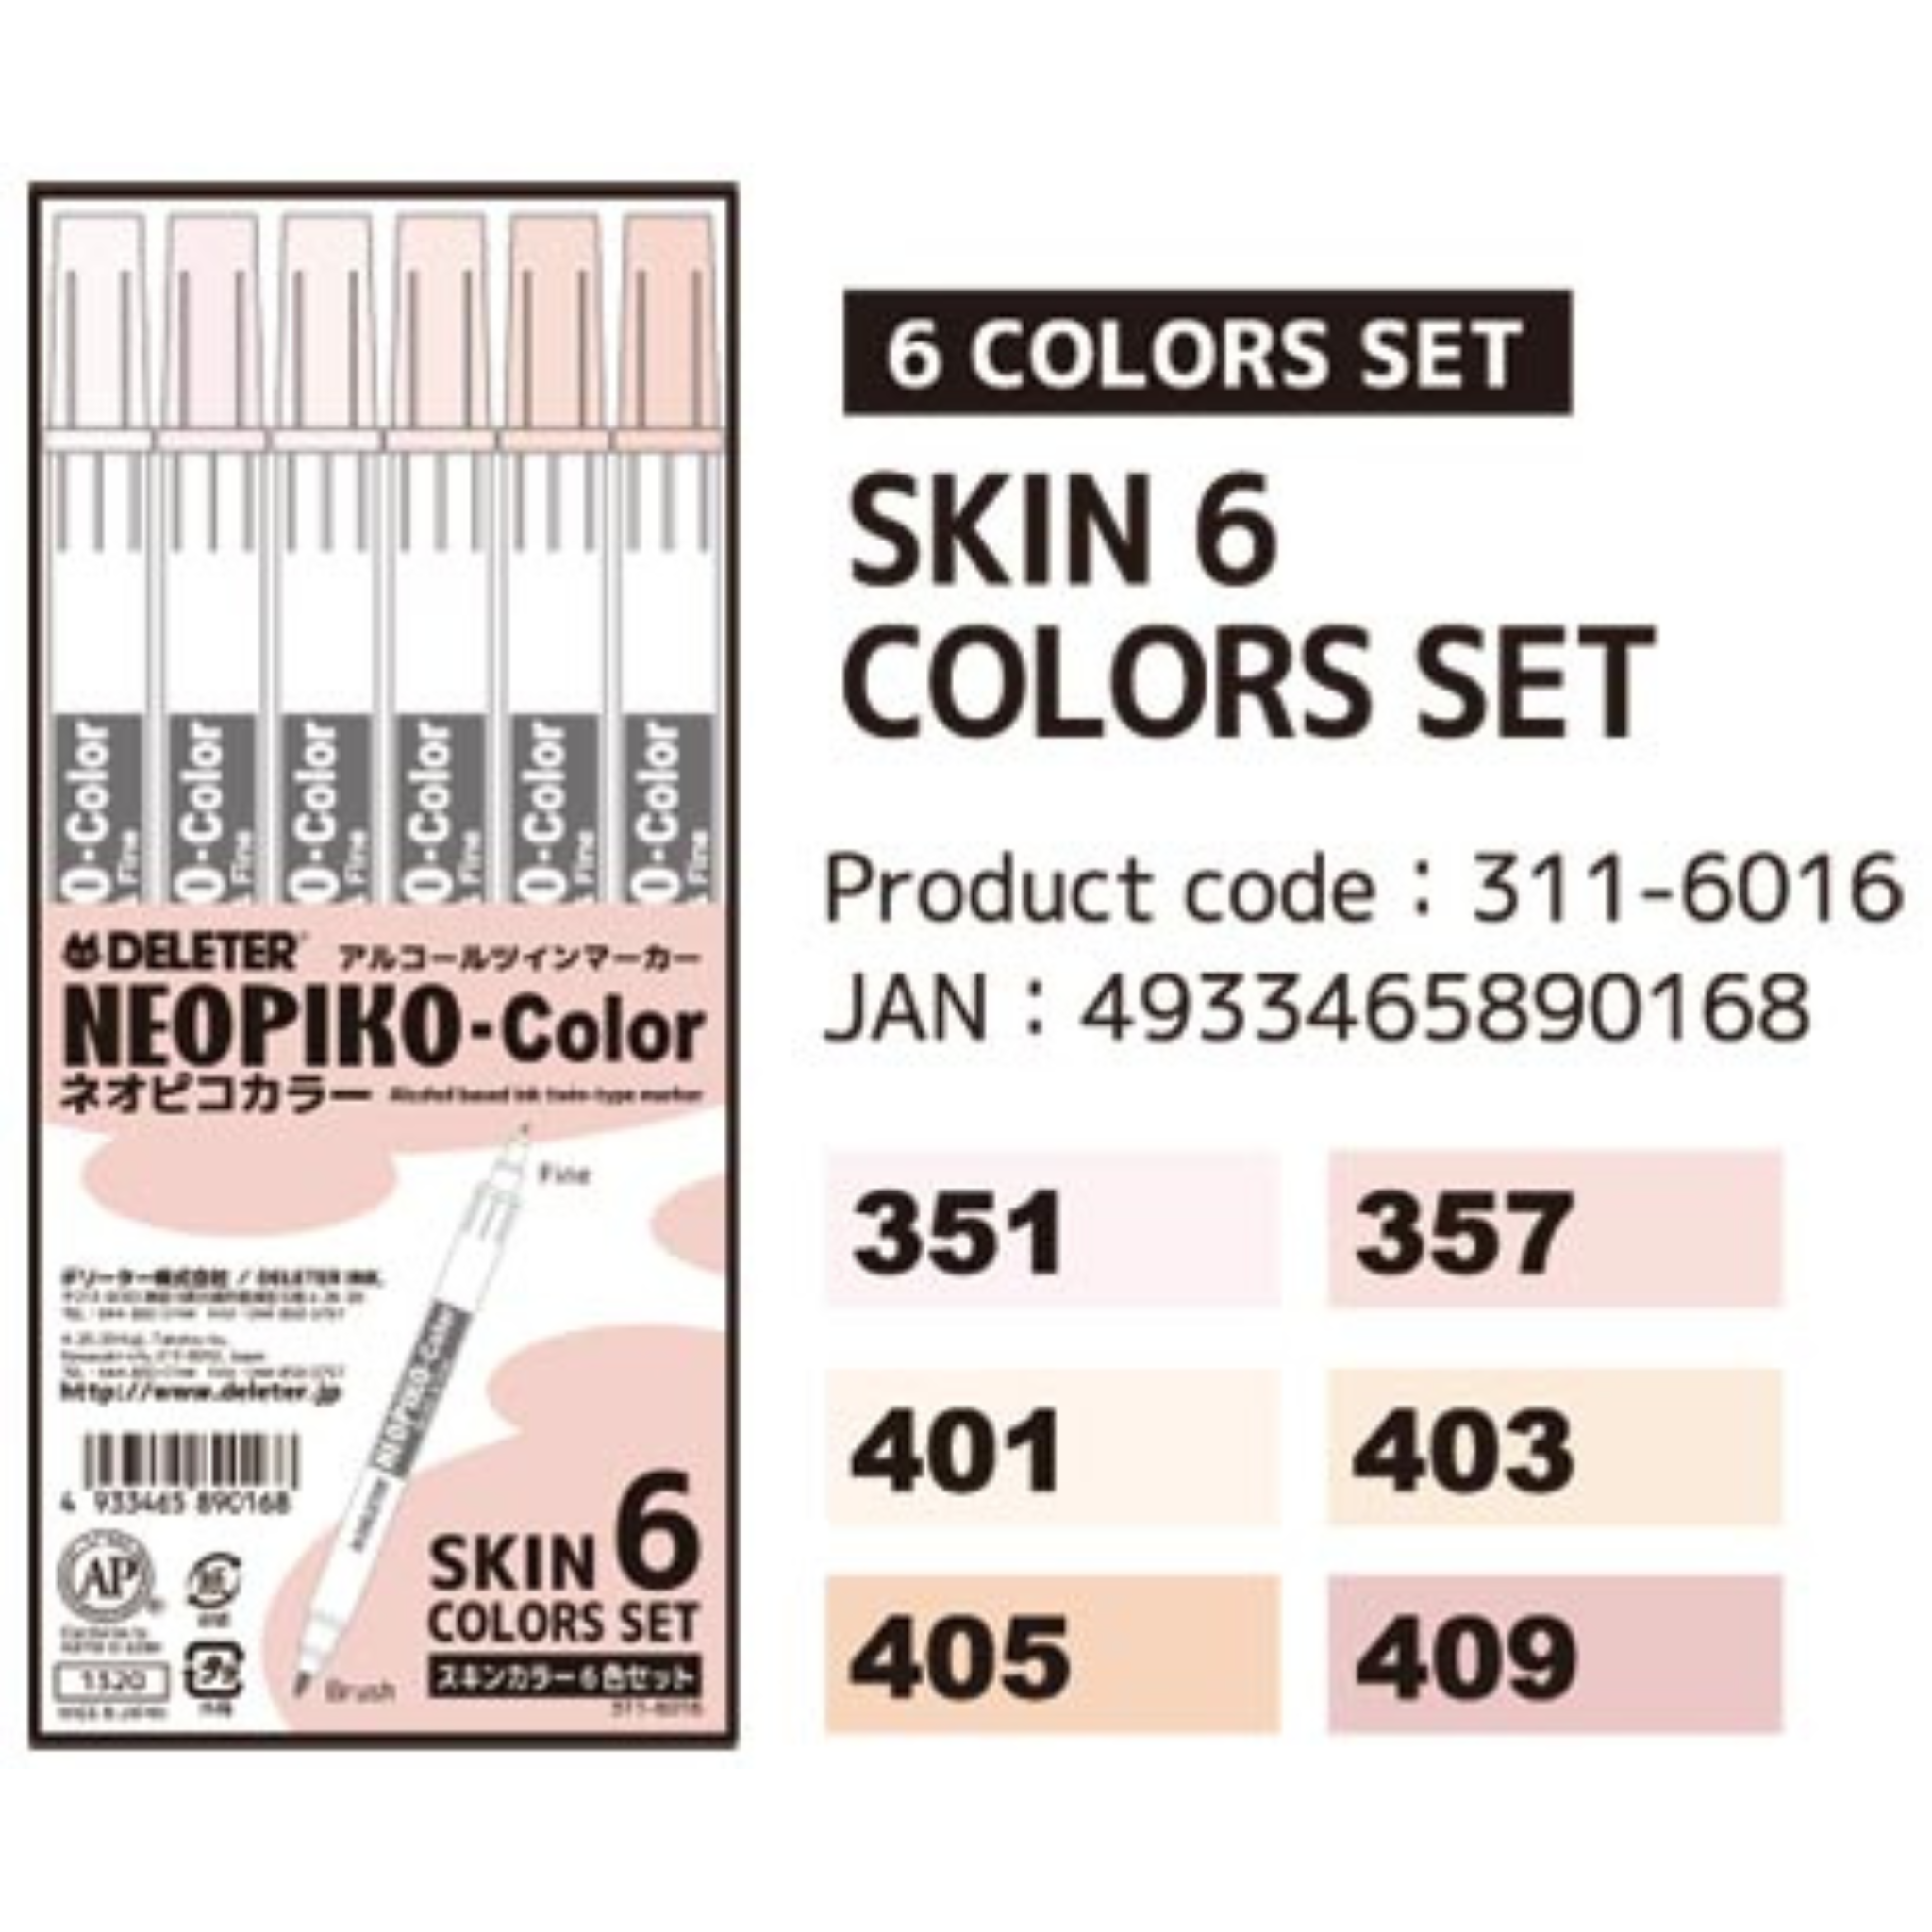 DELETER Neopiko Color, Skin 6 colors set